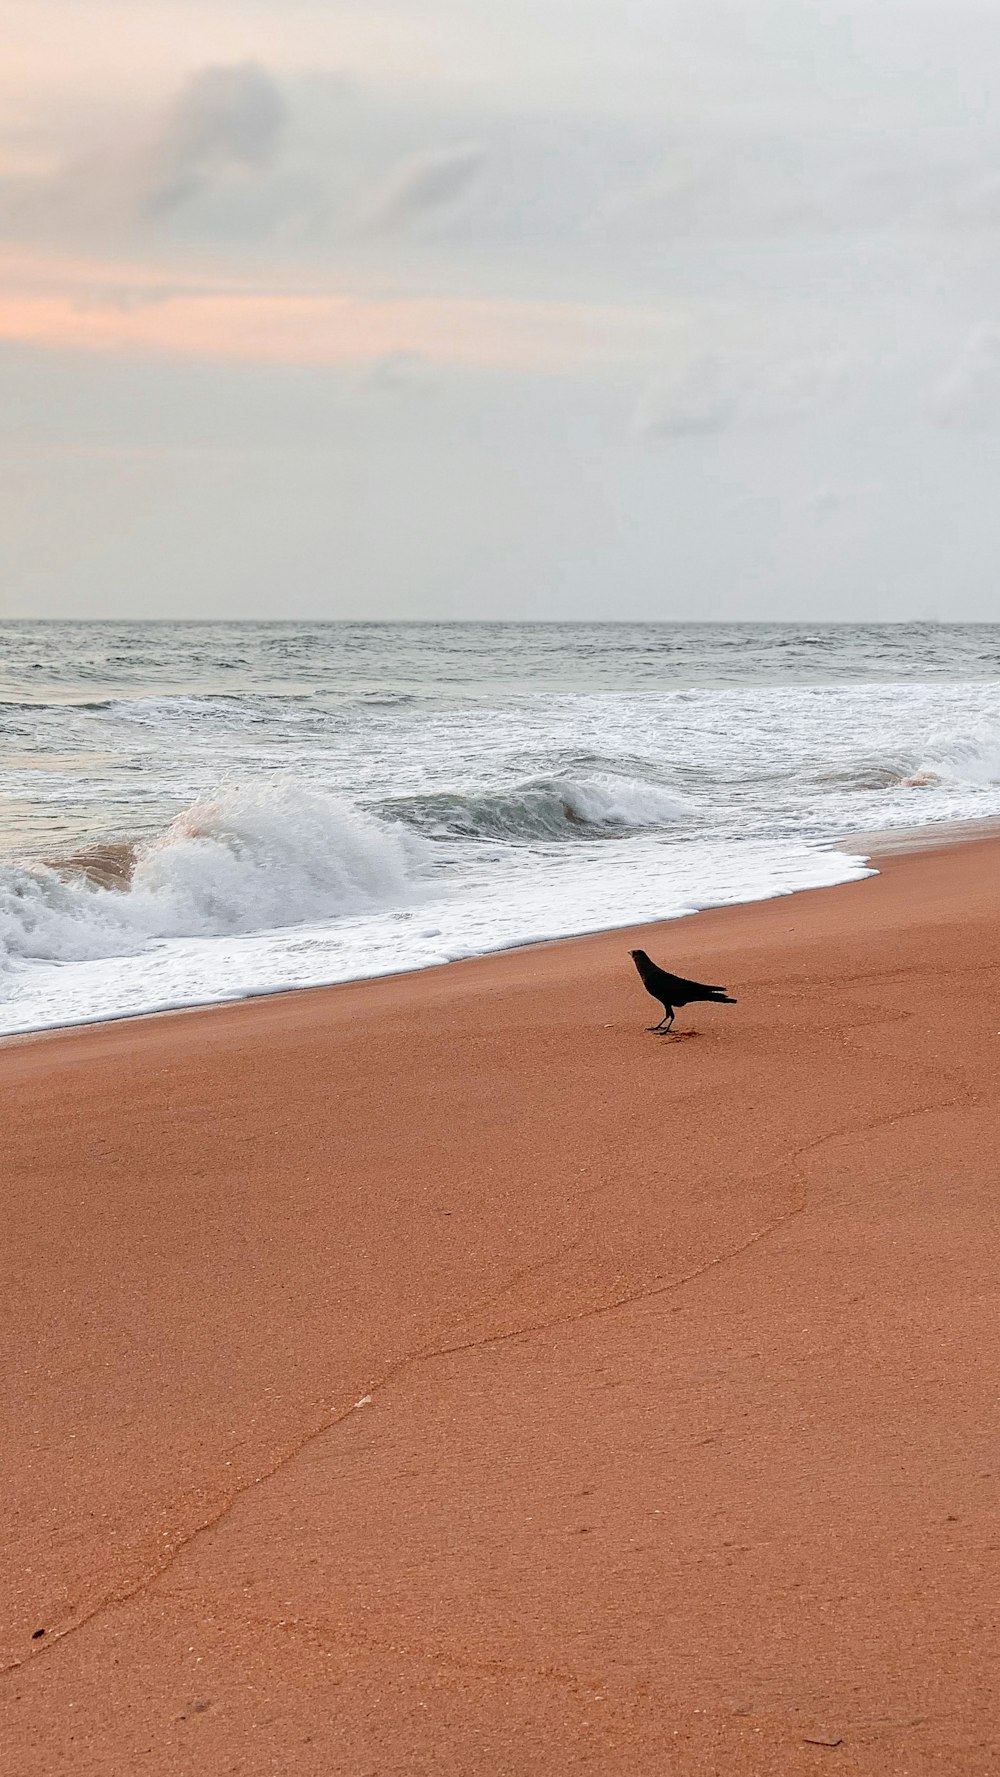 black bird on brown sand near sea waves during daytime